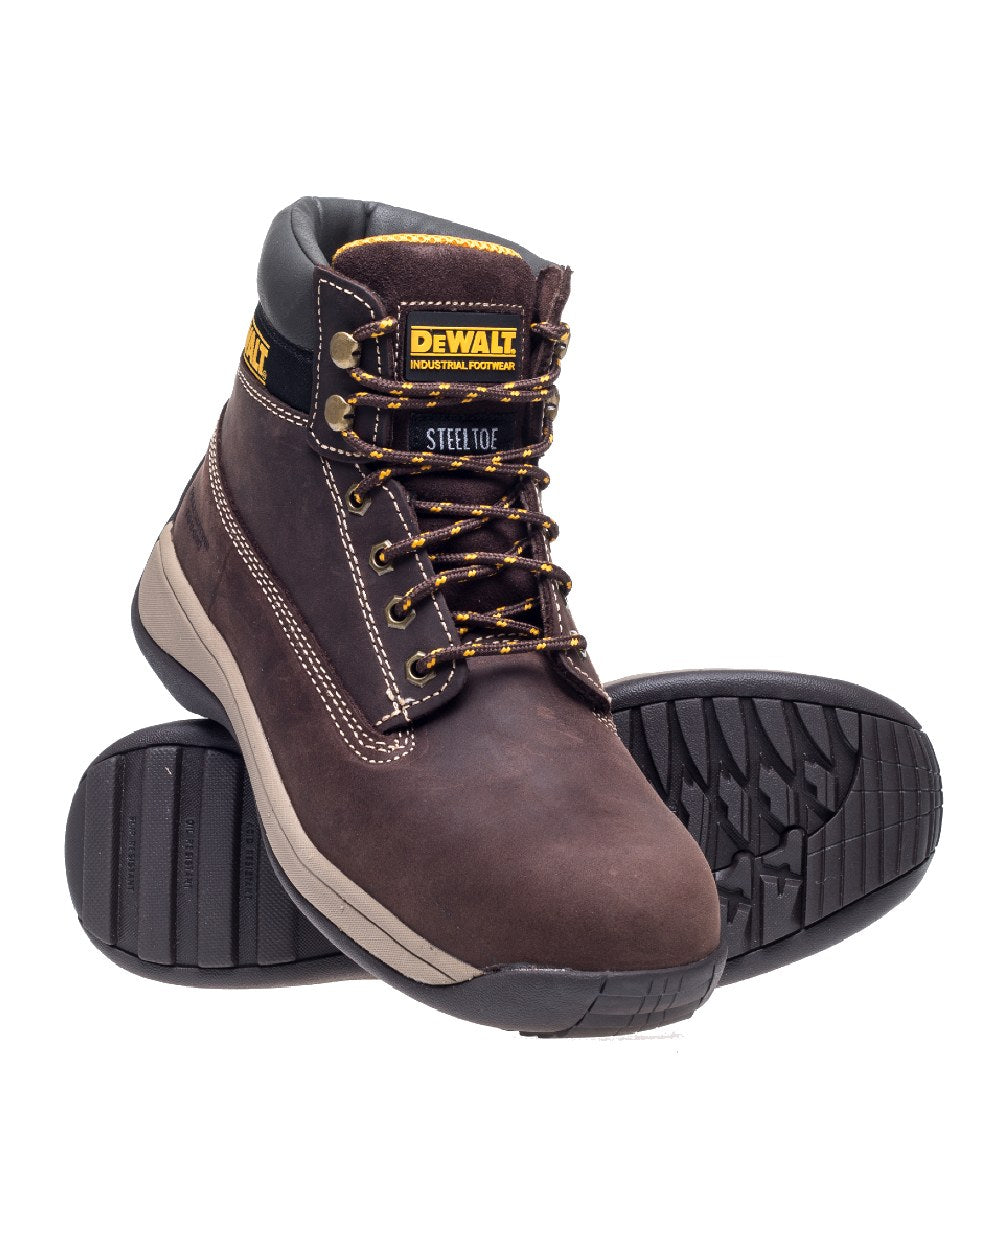 DeWalt Apprentice Nubuck Safety Hiker Boots in Brown 